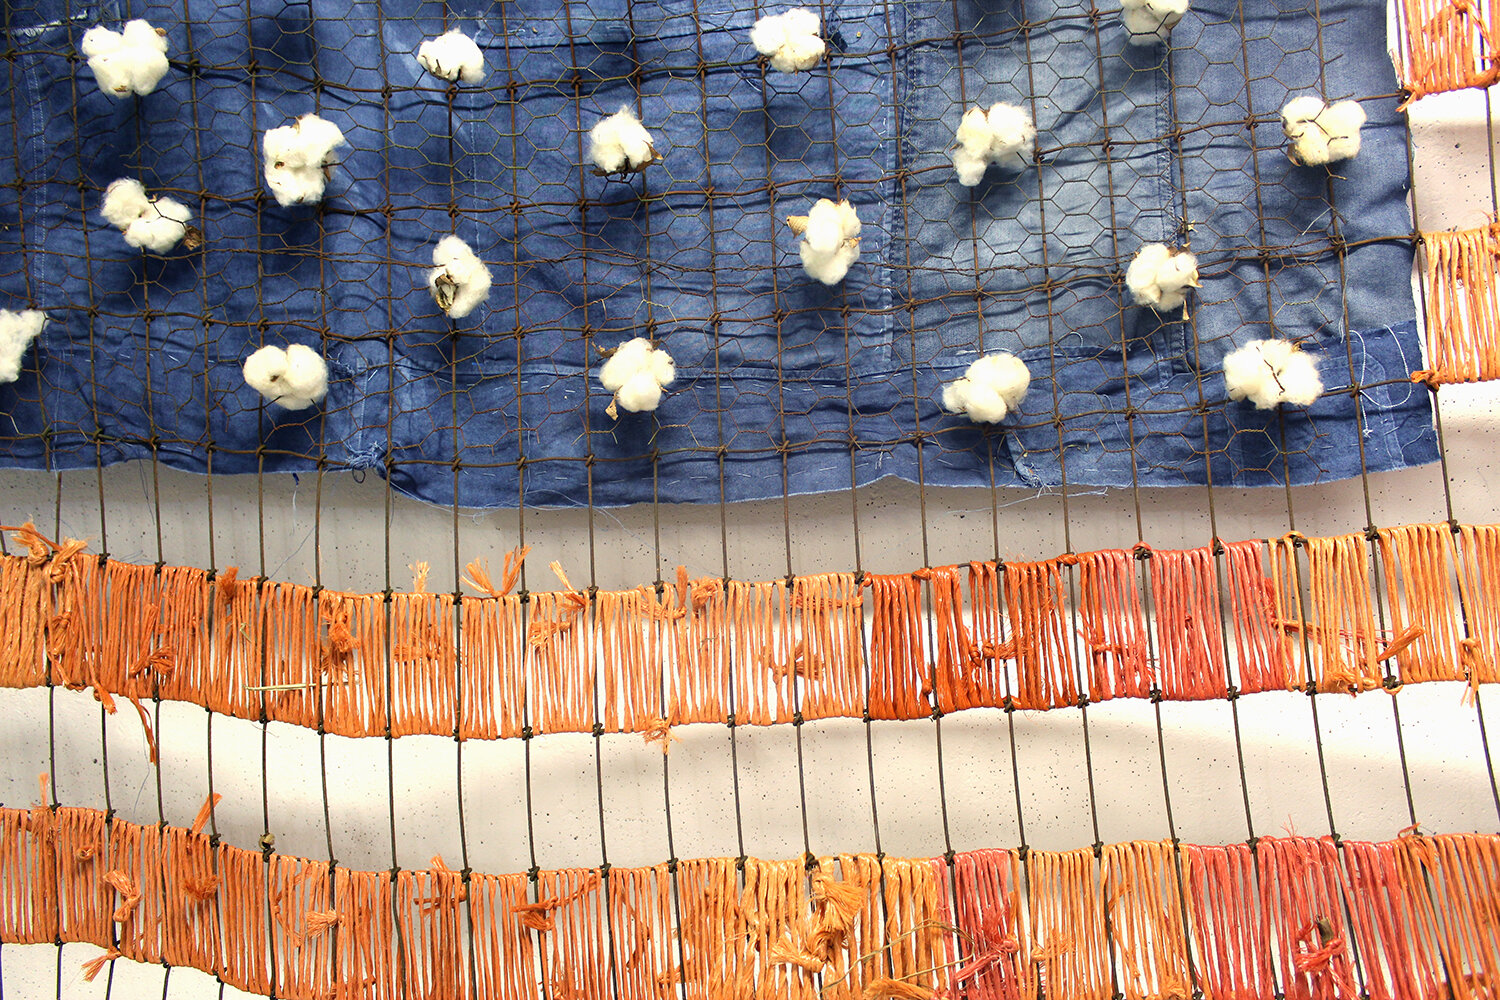  “Blue Collar Dream (detail),” 2020, Hay bailing string, cotton, denim, indigo dye and wire, ” 53” x 102” 